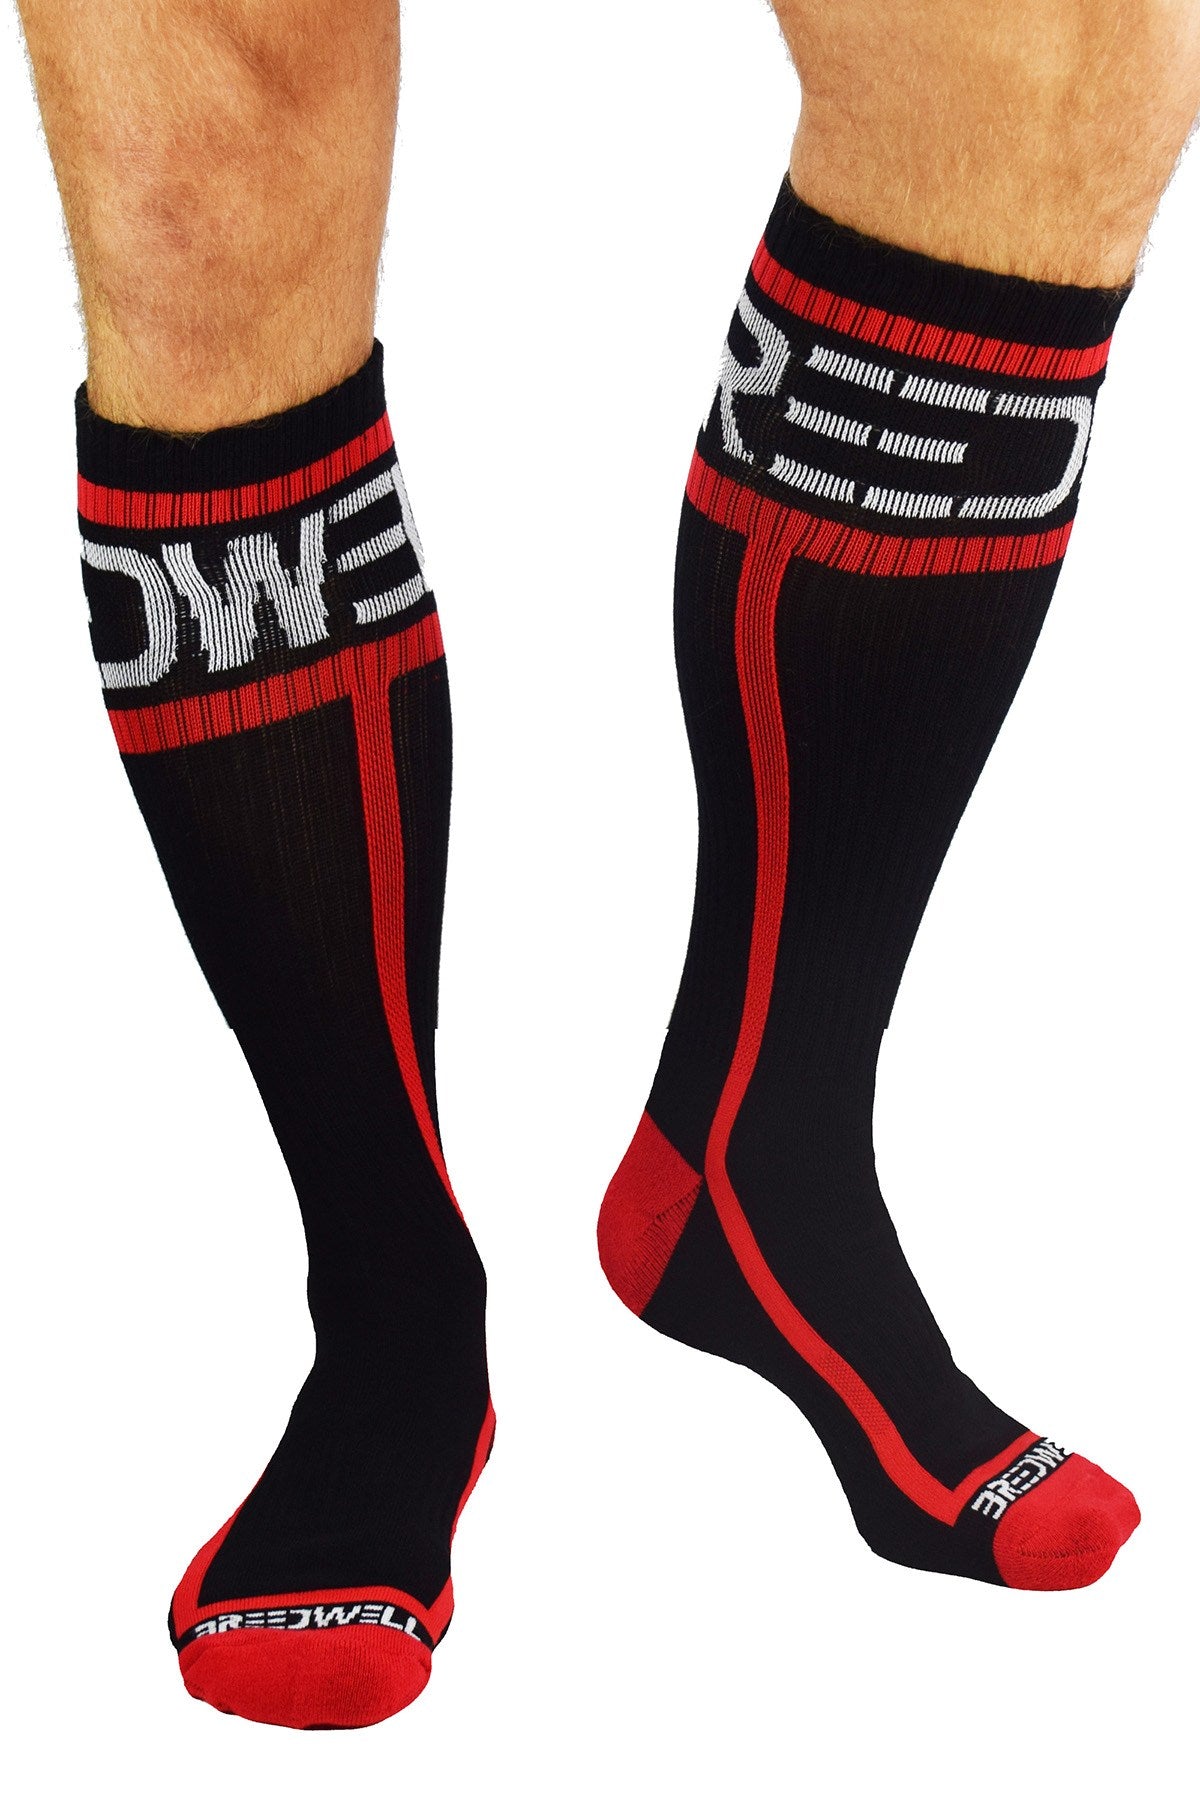 Breedwell Red Logo Socks